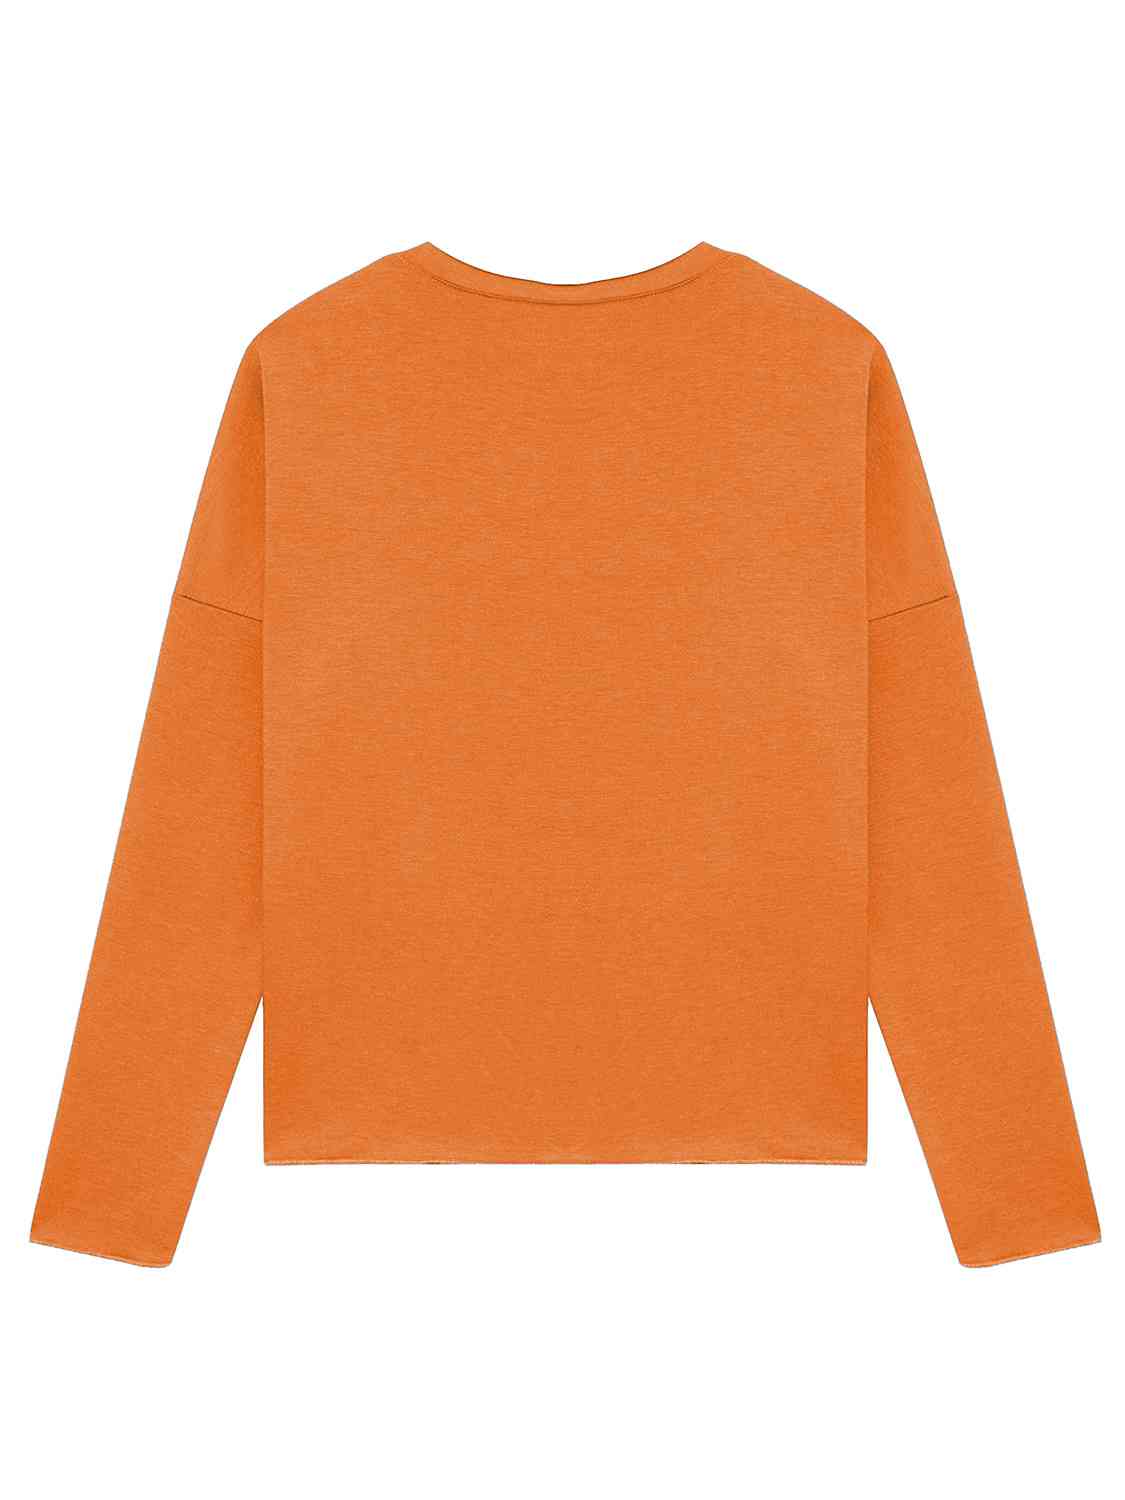 SAVE THE PUMPKIN Graphic Full Size Sweatshirt